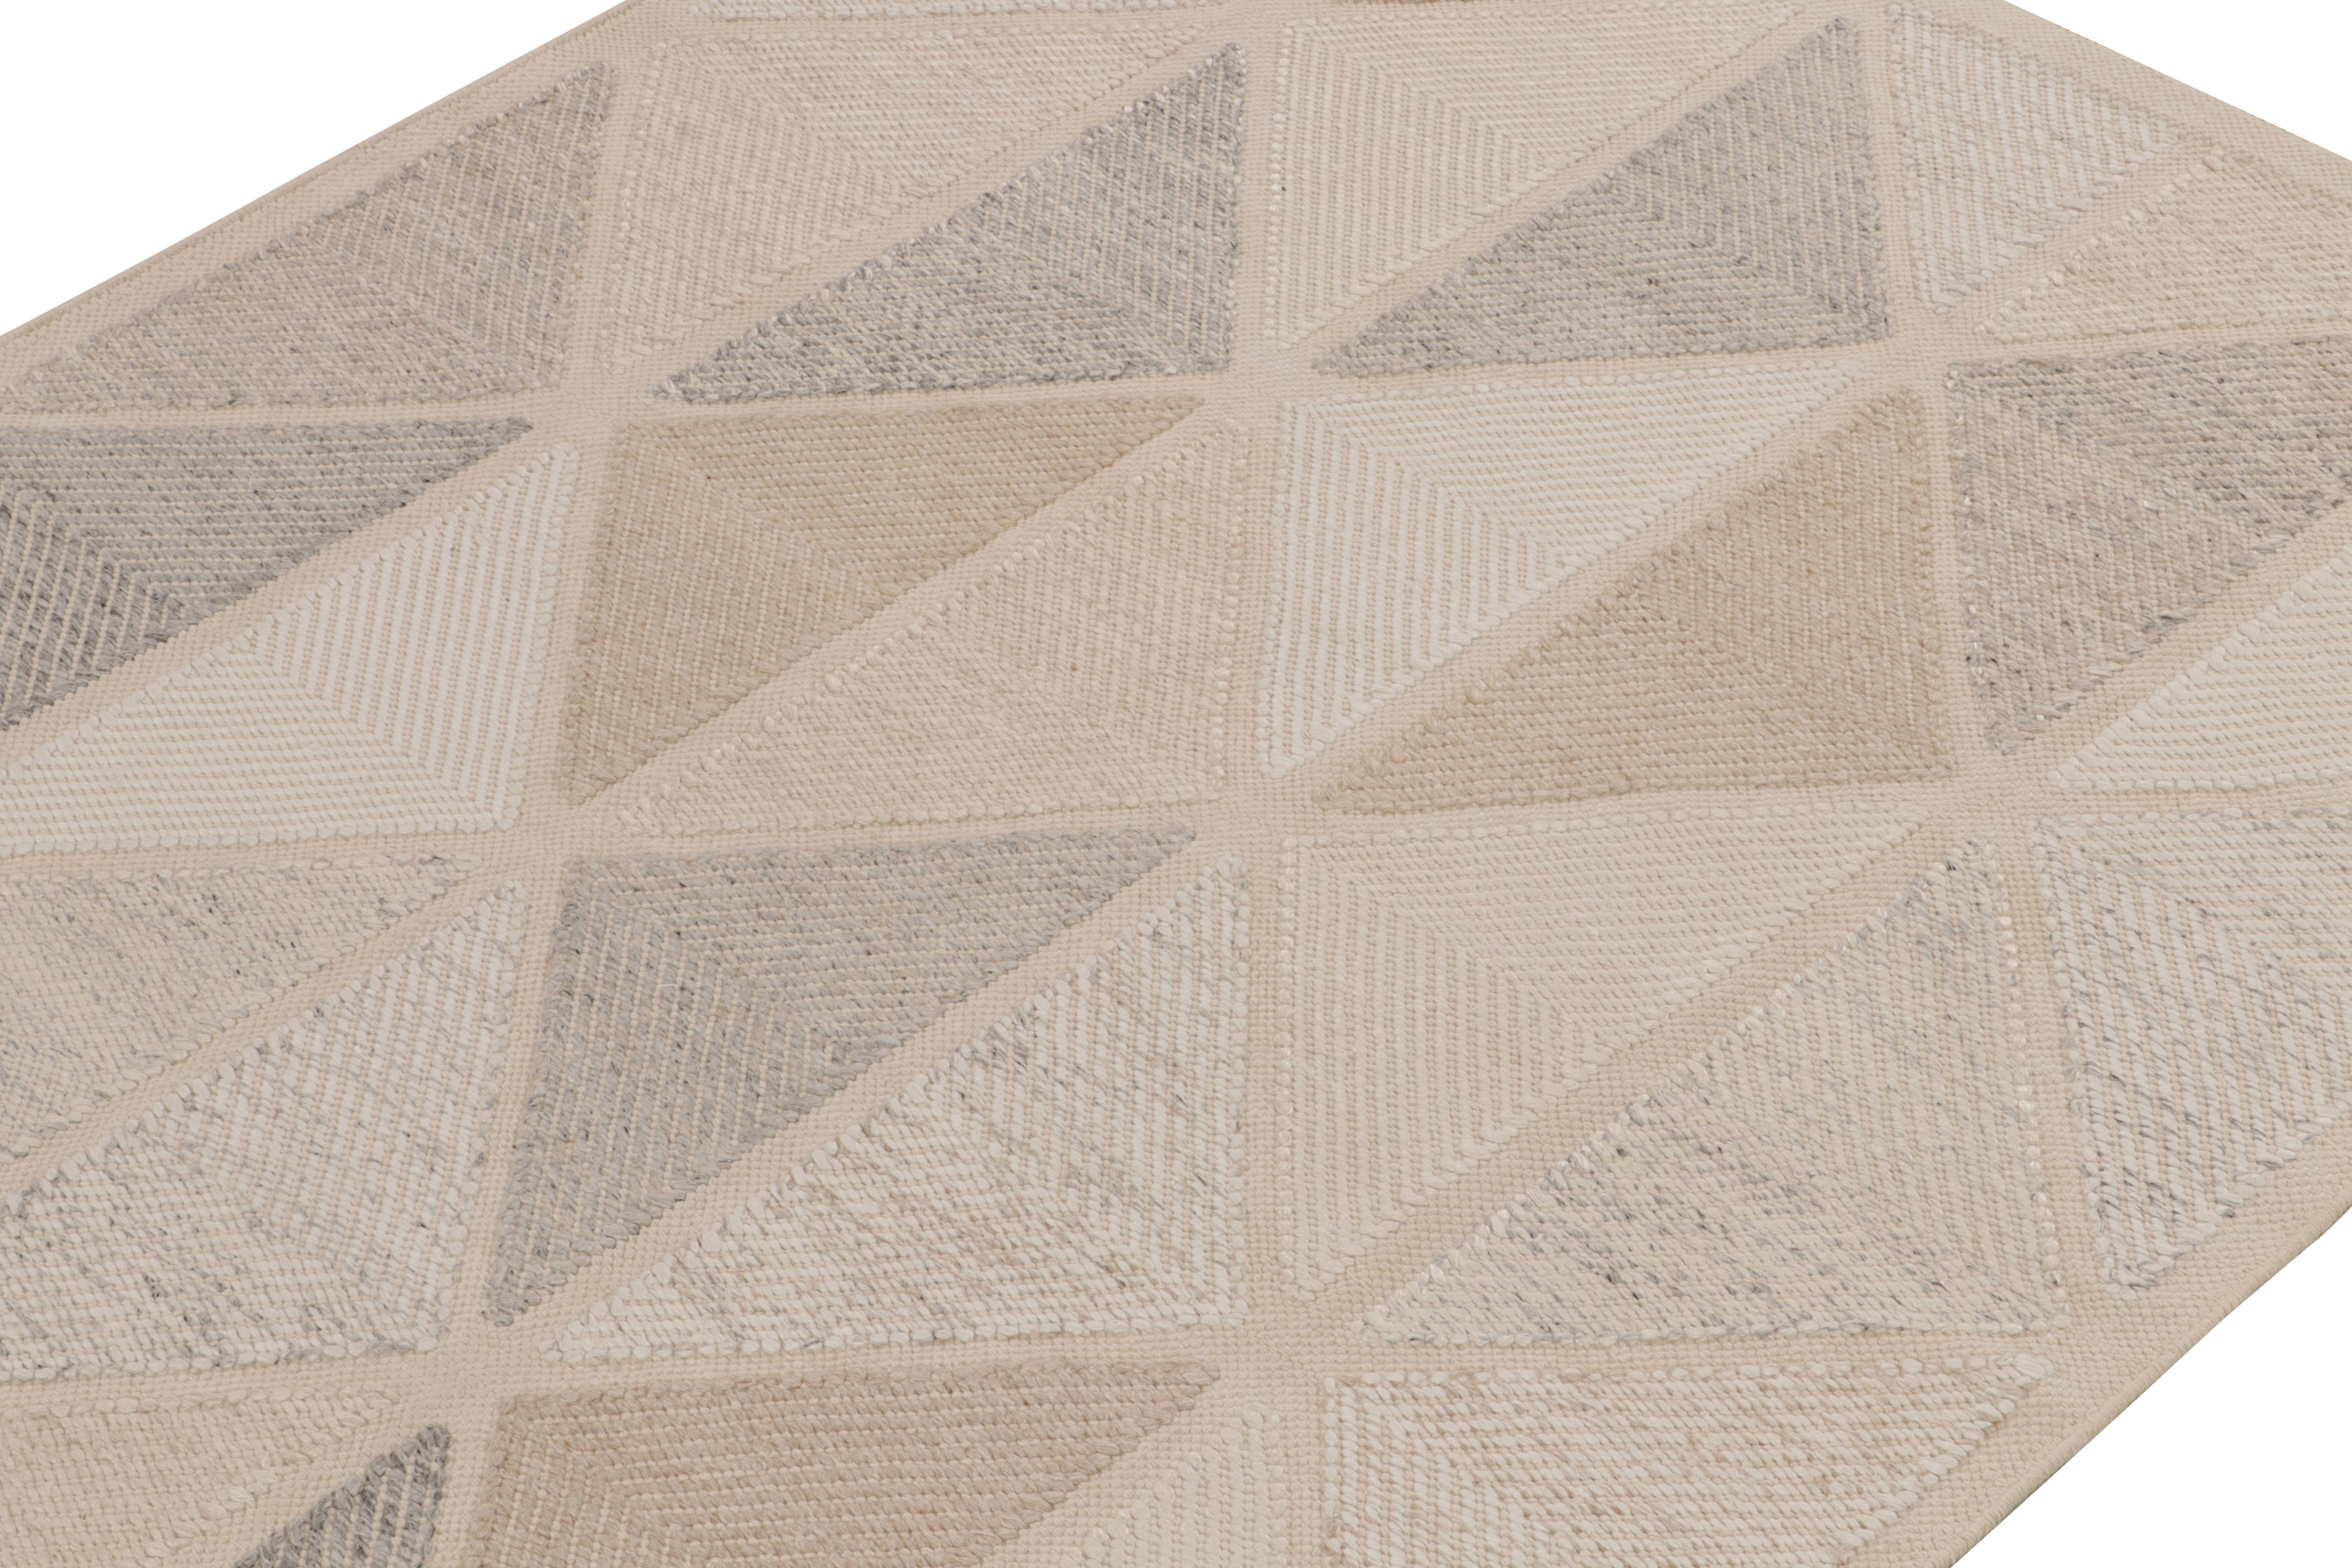 Indian Rug & Kilim's Scandinavian Style Kilim in Beige-Brown, Gray Geometric Pattern For Sale